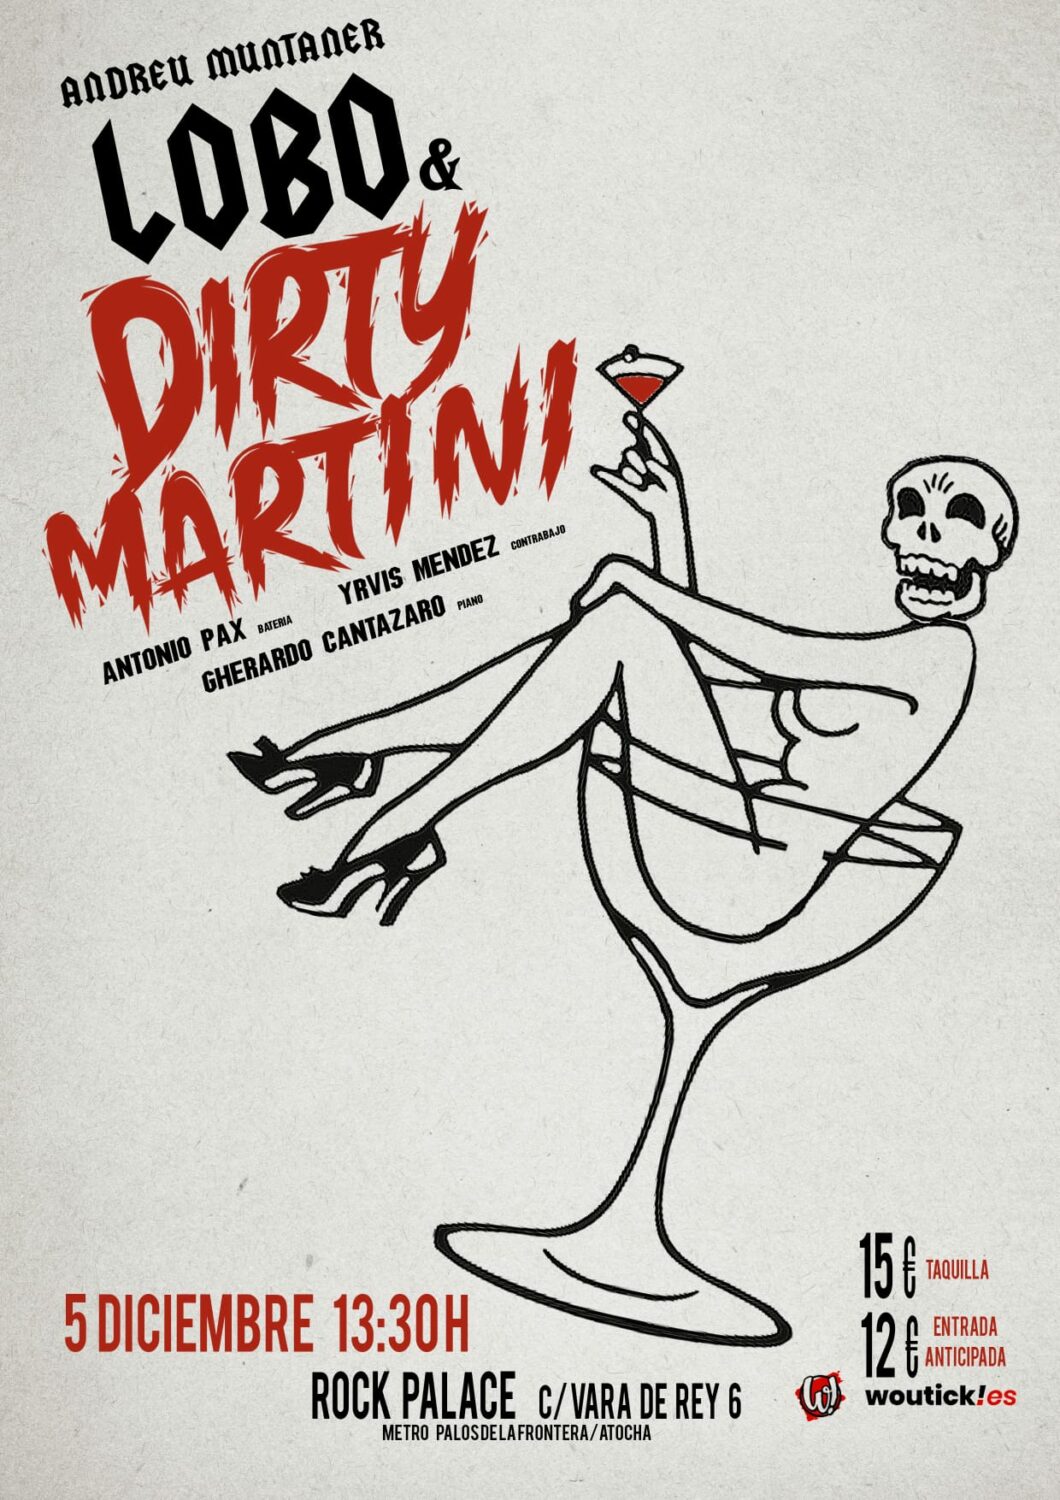 Andreu Muntaner 'Lobo' ¡Fiesta "Dirty Martini" en la Rock Palace!